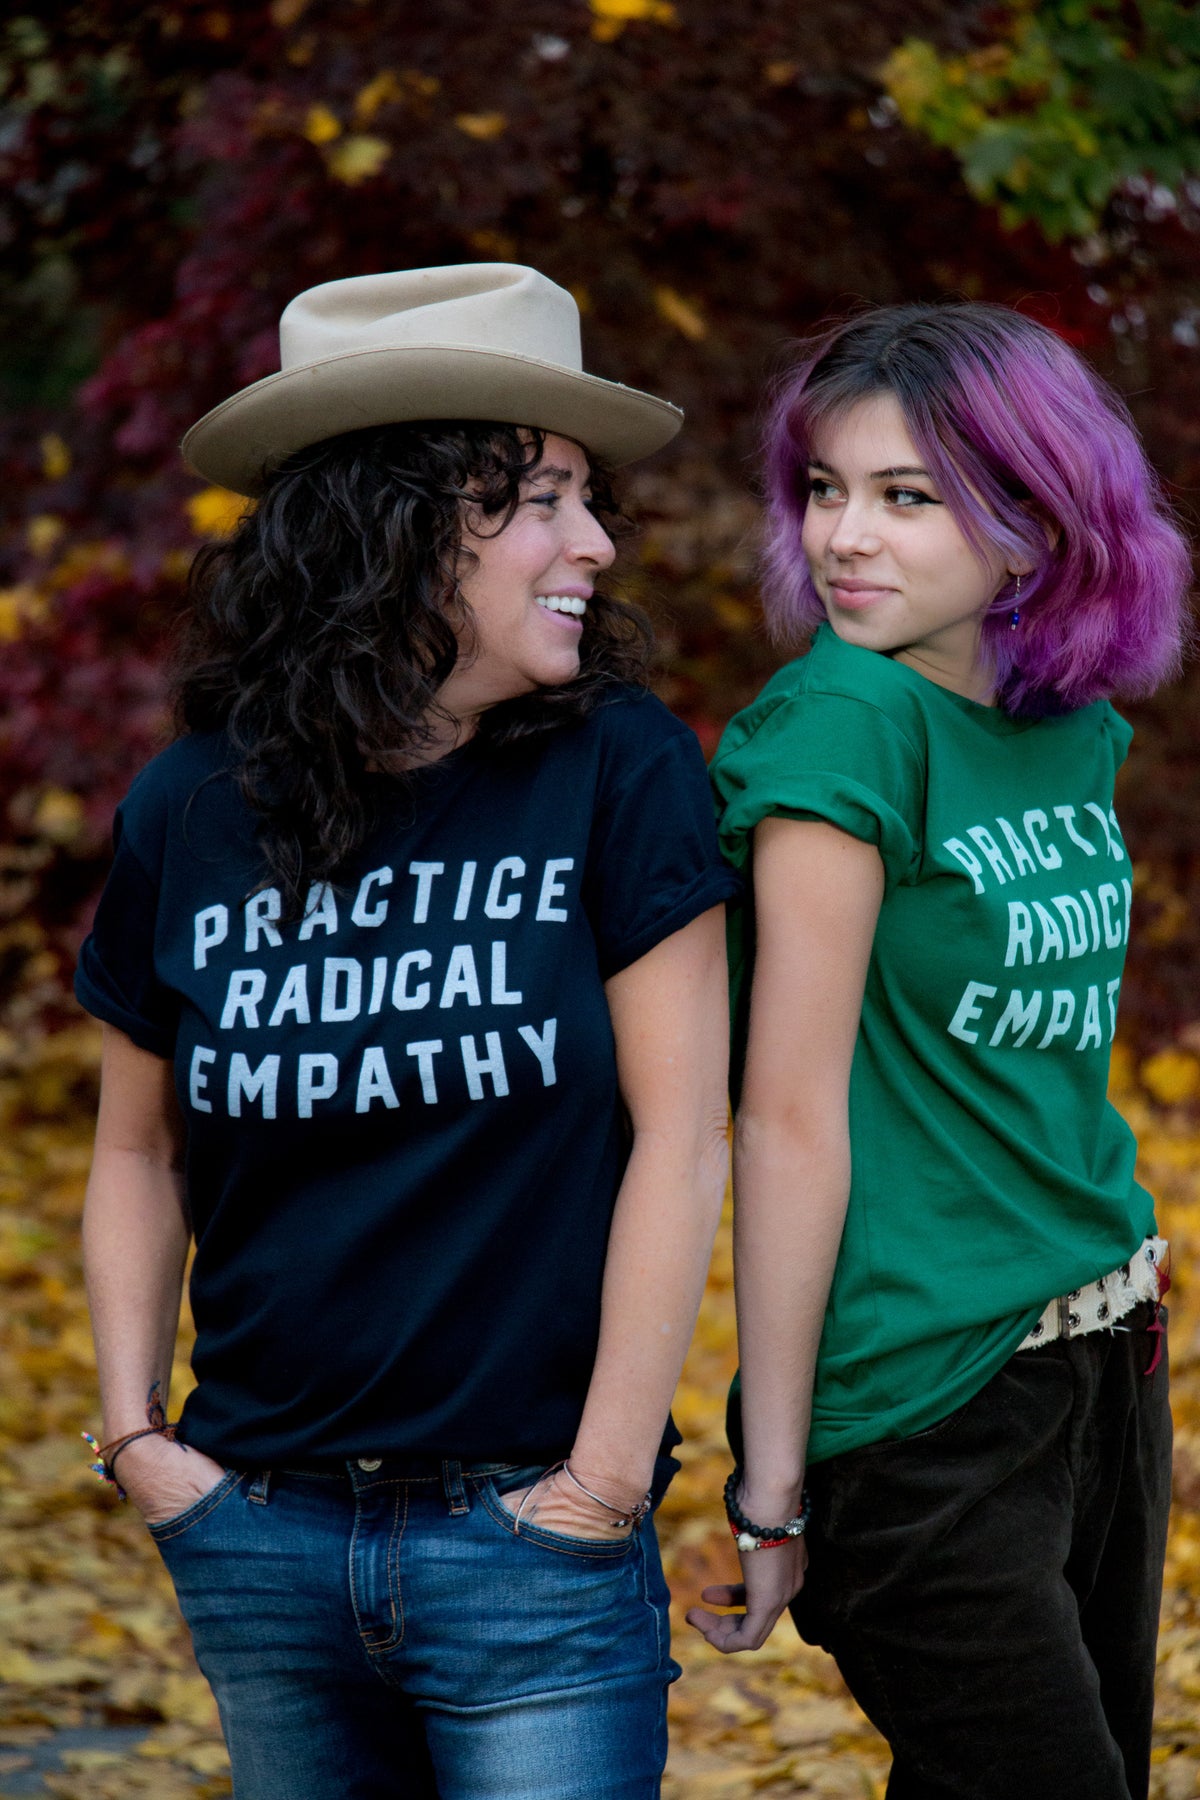 Practice Radical Empathy Tee